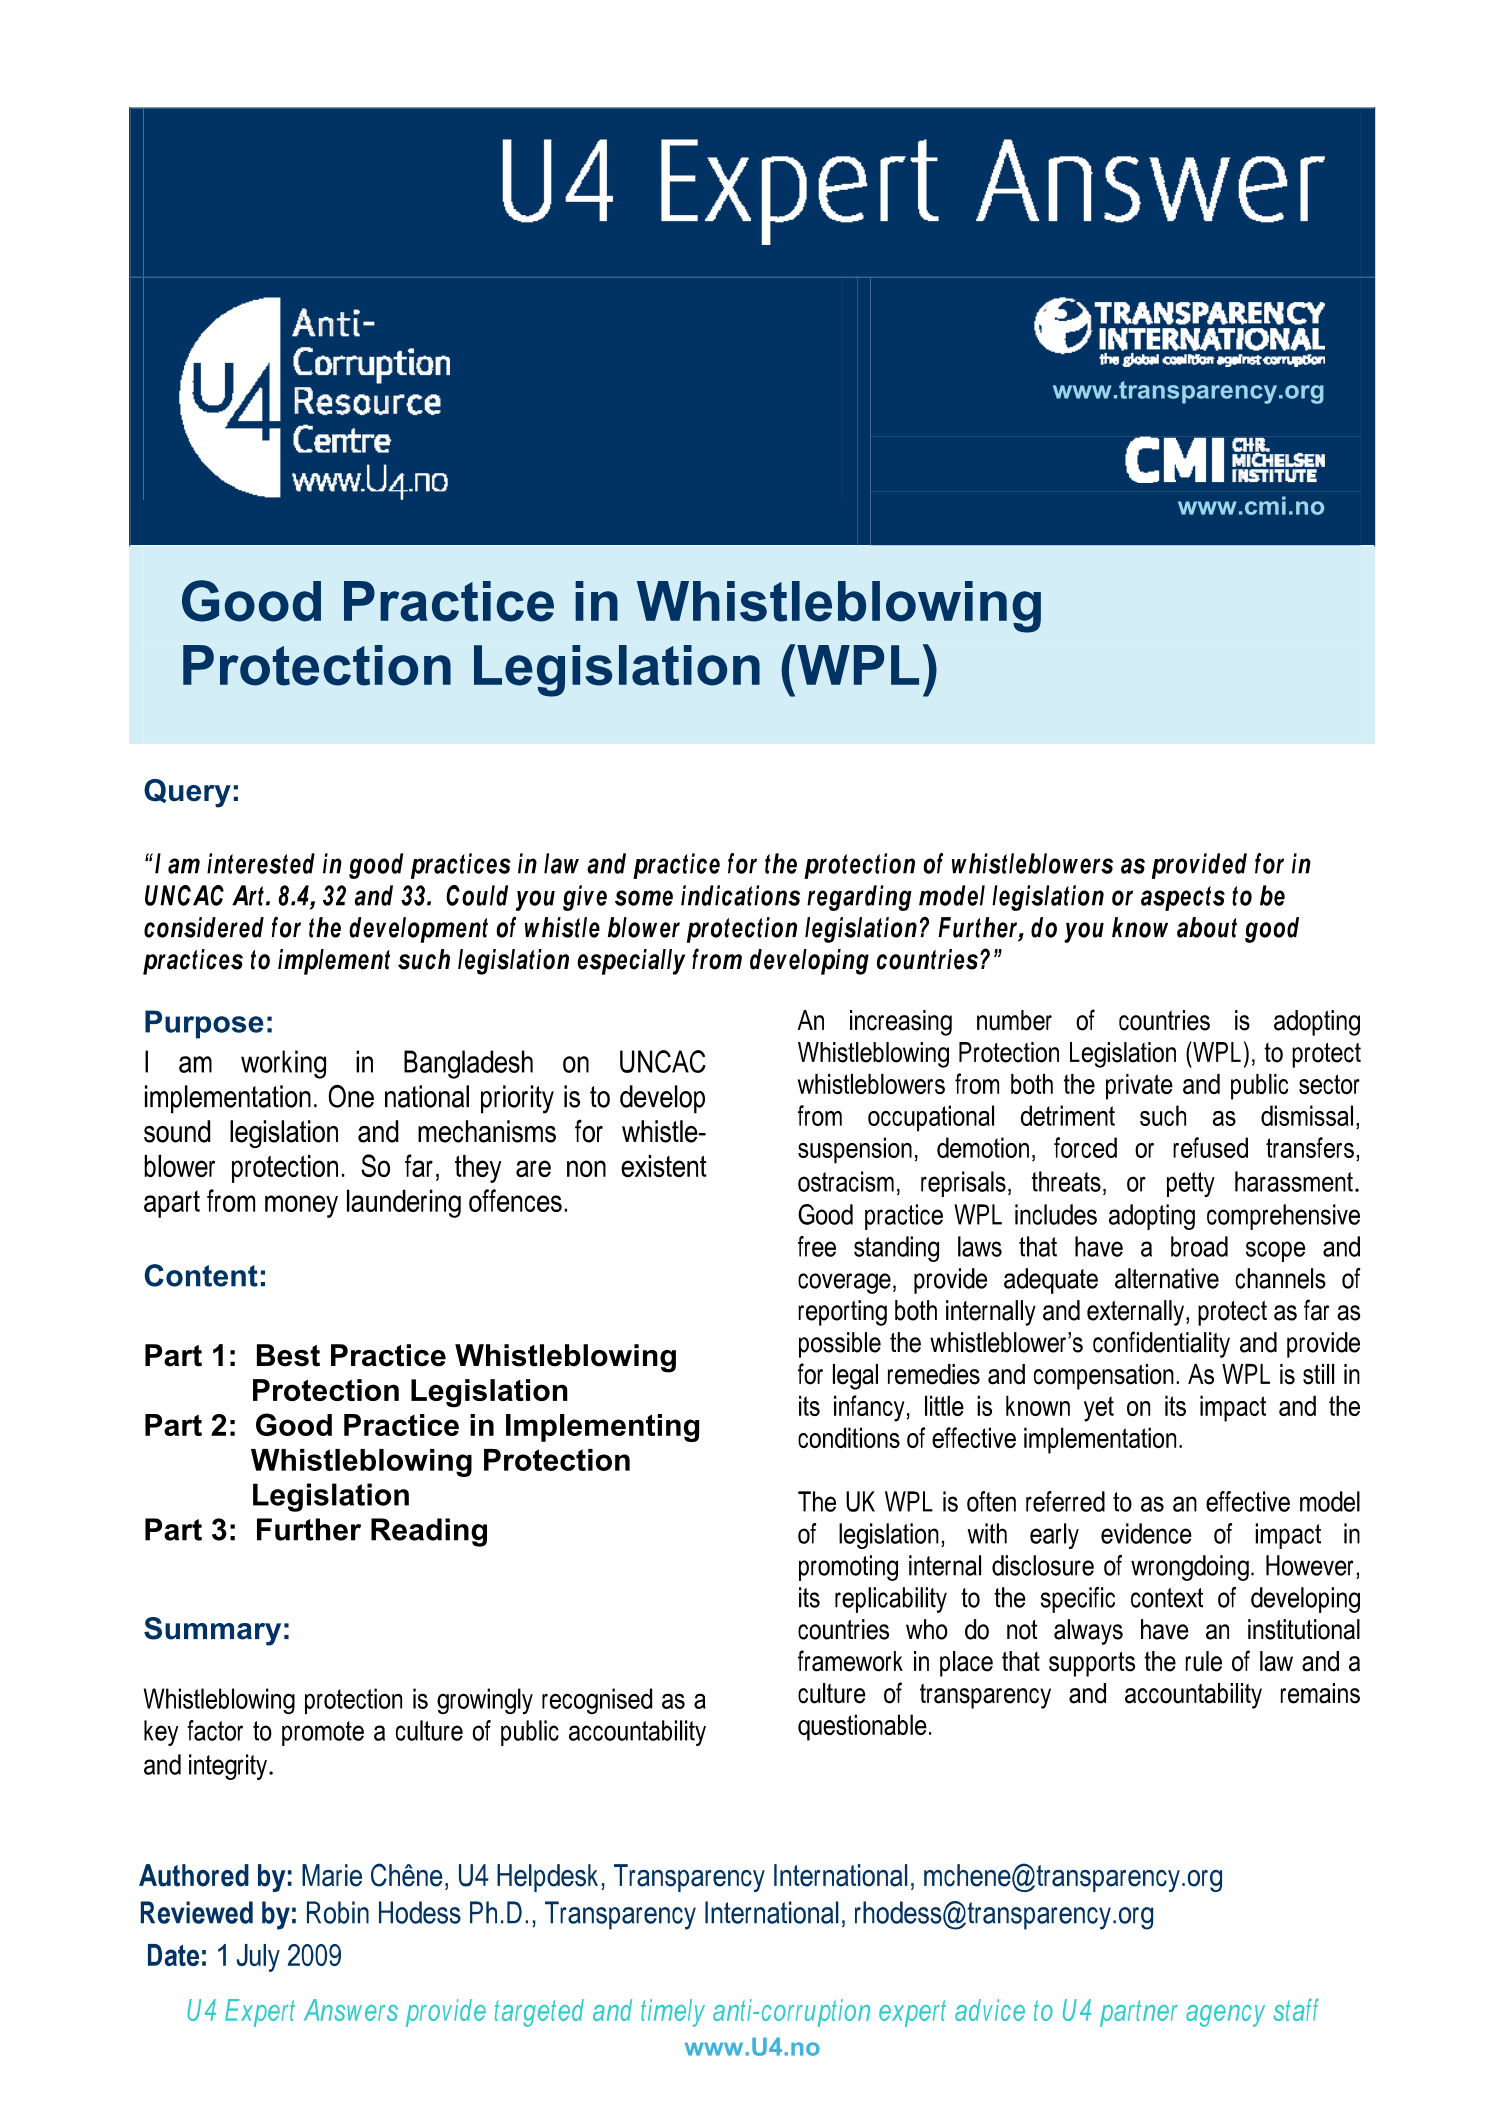 Good Practice in Whistleblowing Protection Legislation (WPL)